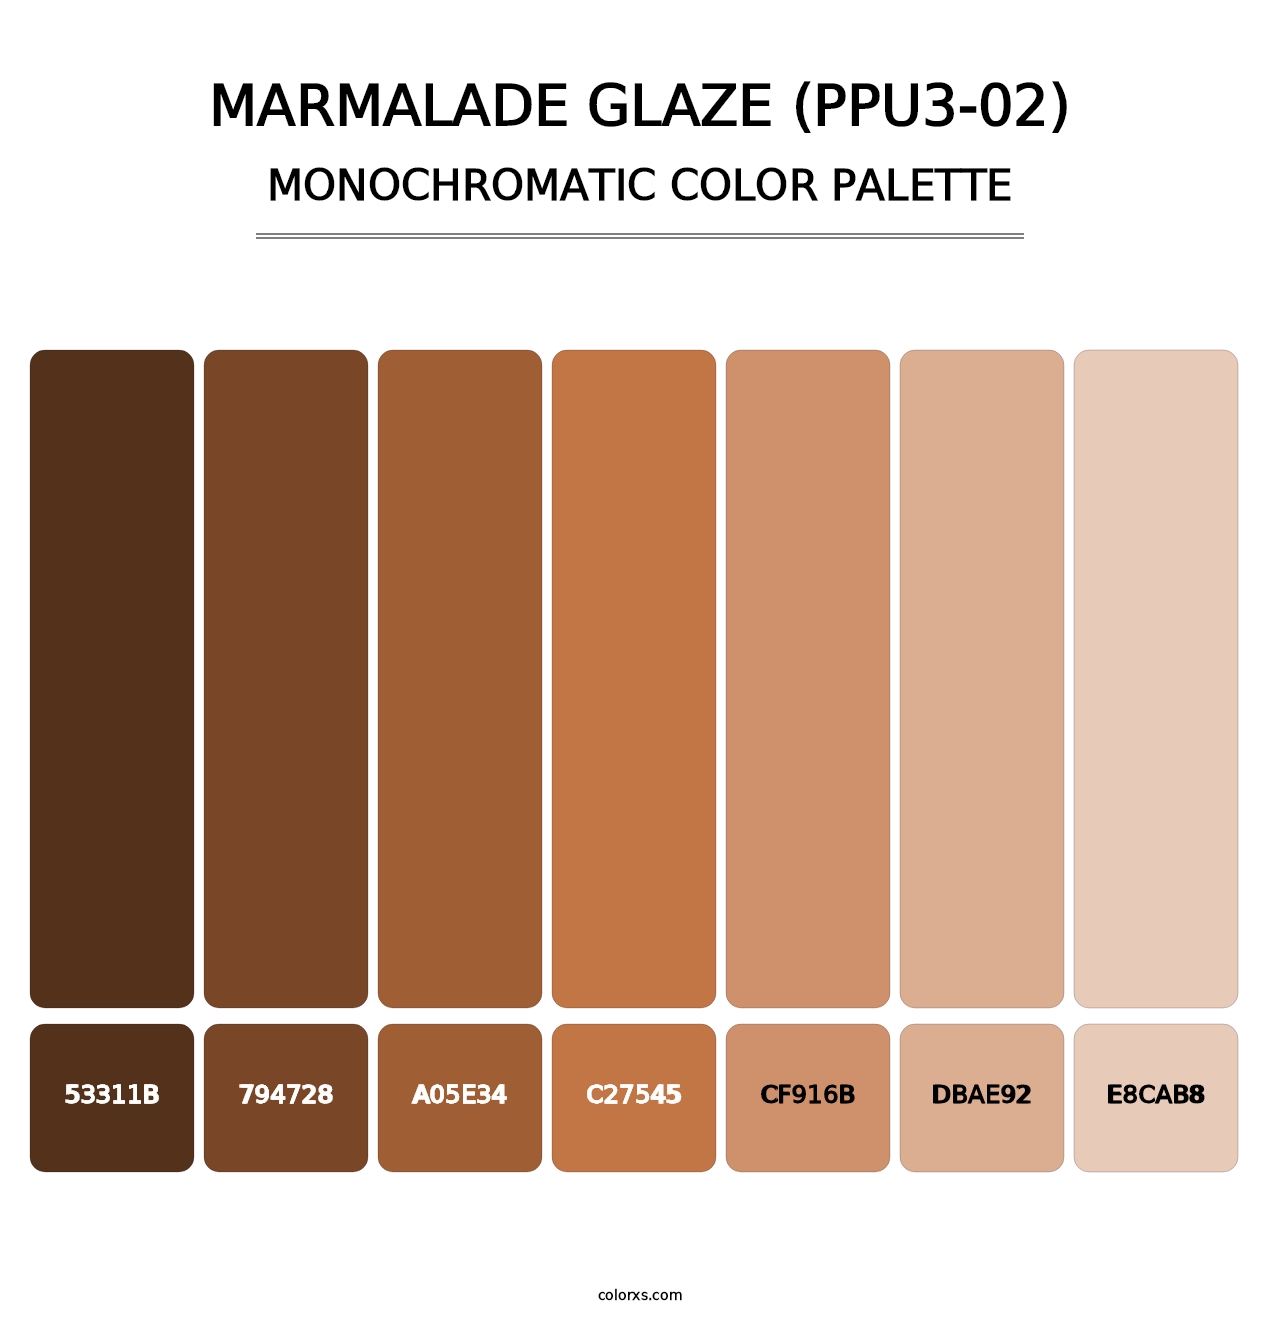 Marmalade Glaze (PPU3-02) - Monochromatic Color Palette